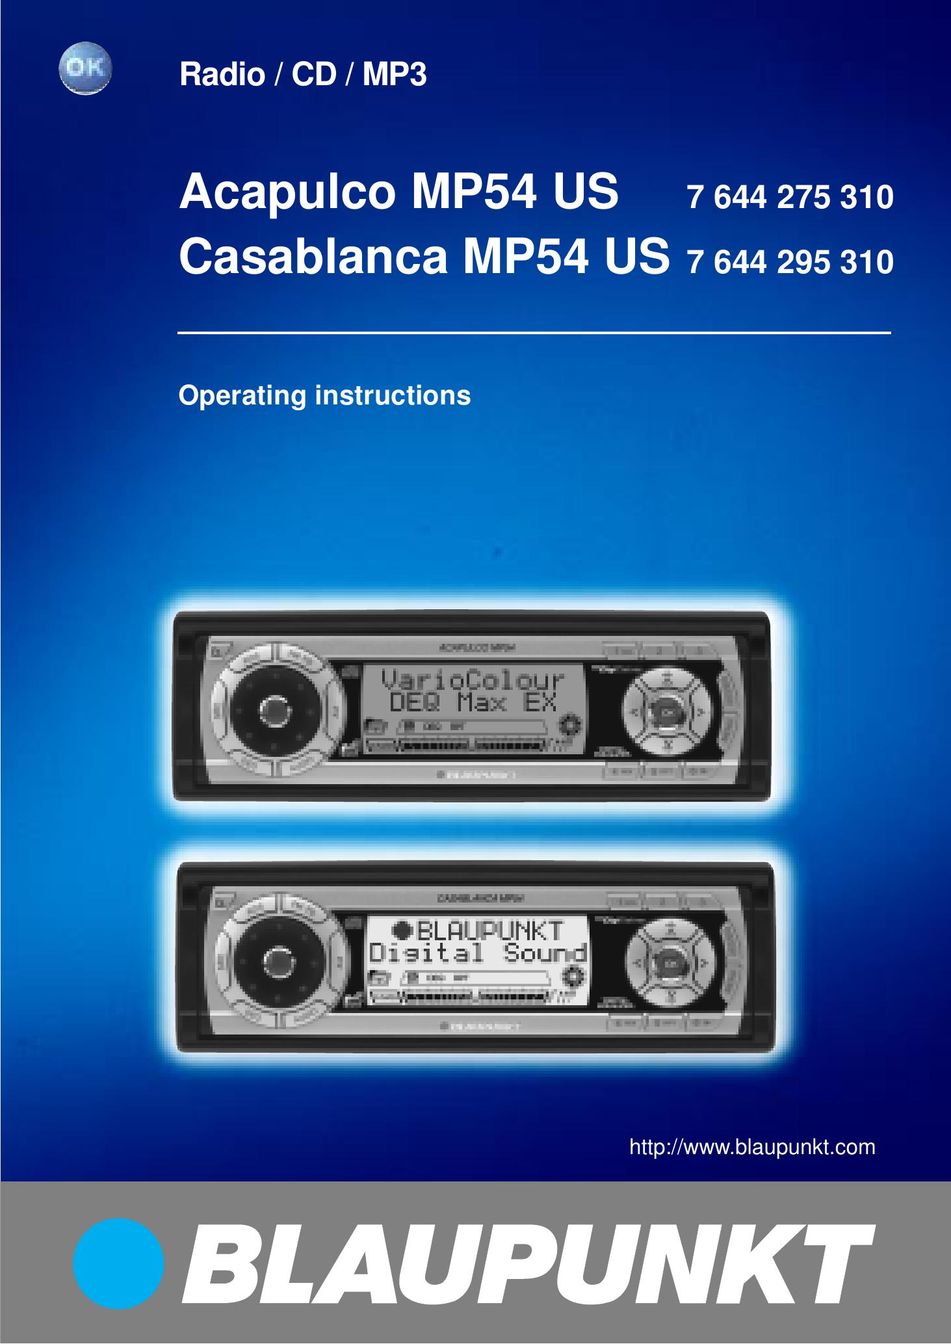 Blaupunkt Acapulco MP54 US, Casablanca MP54 US Car Stereo System User Manual